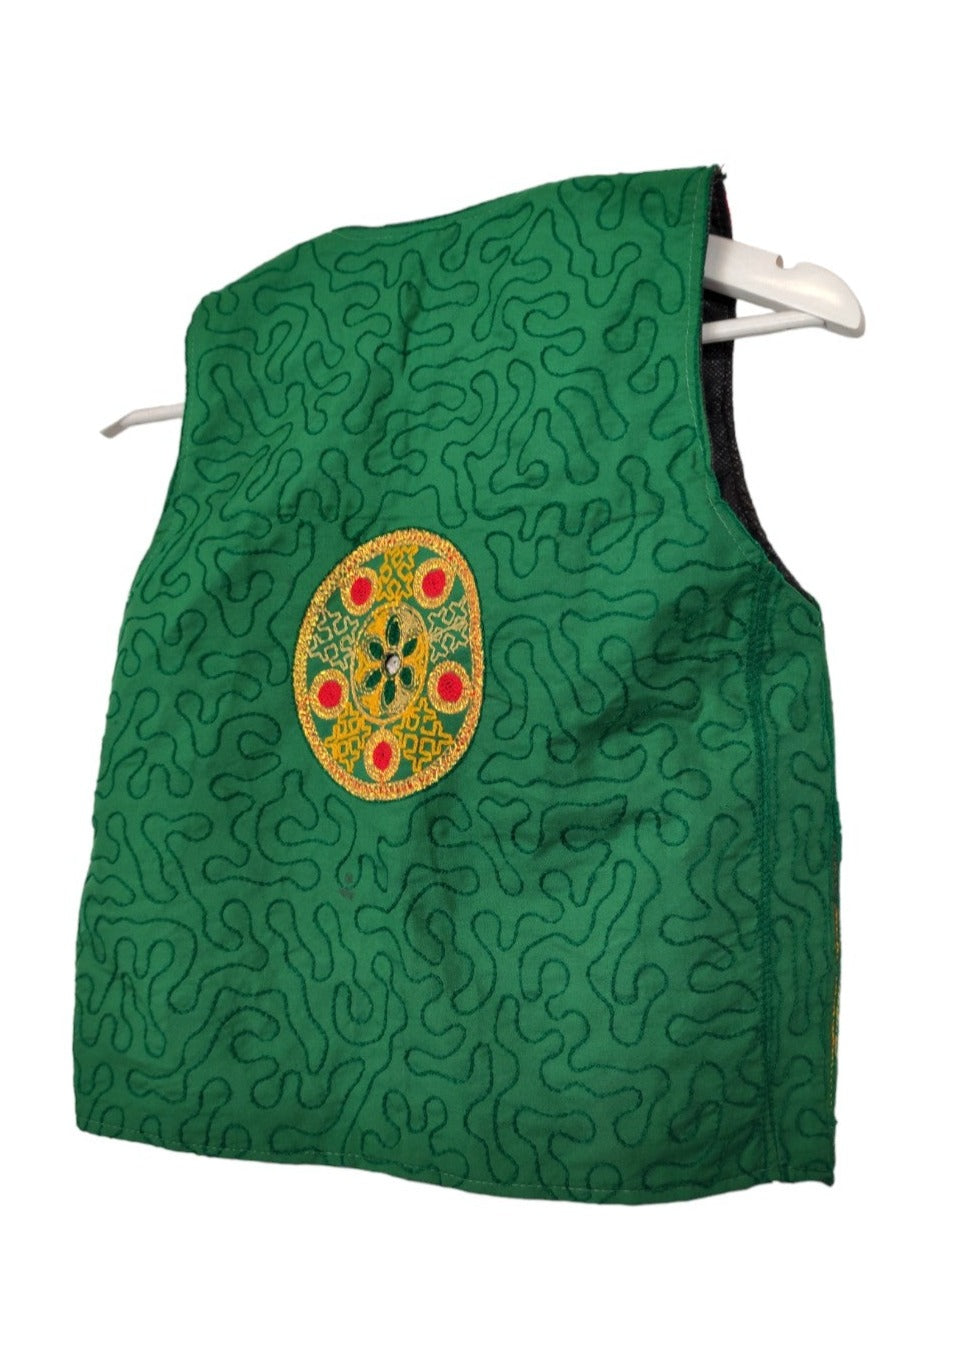 Vintage, Έθνικ Γυναικείο Γιλέκο σε Πράσινο Χρώμα με Lurex Λεπτομέρειες (Small)